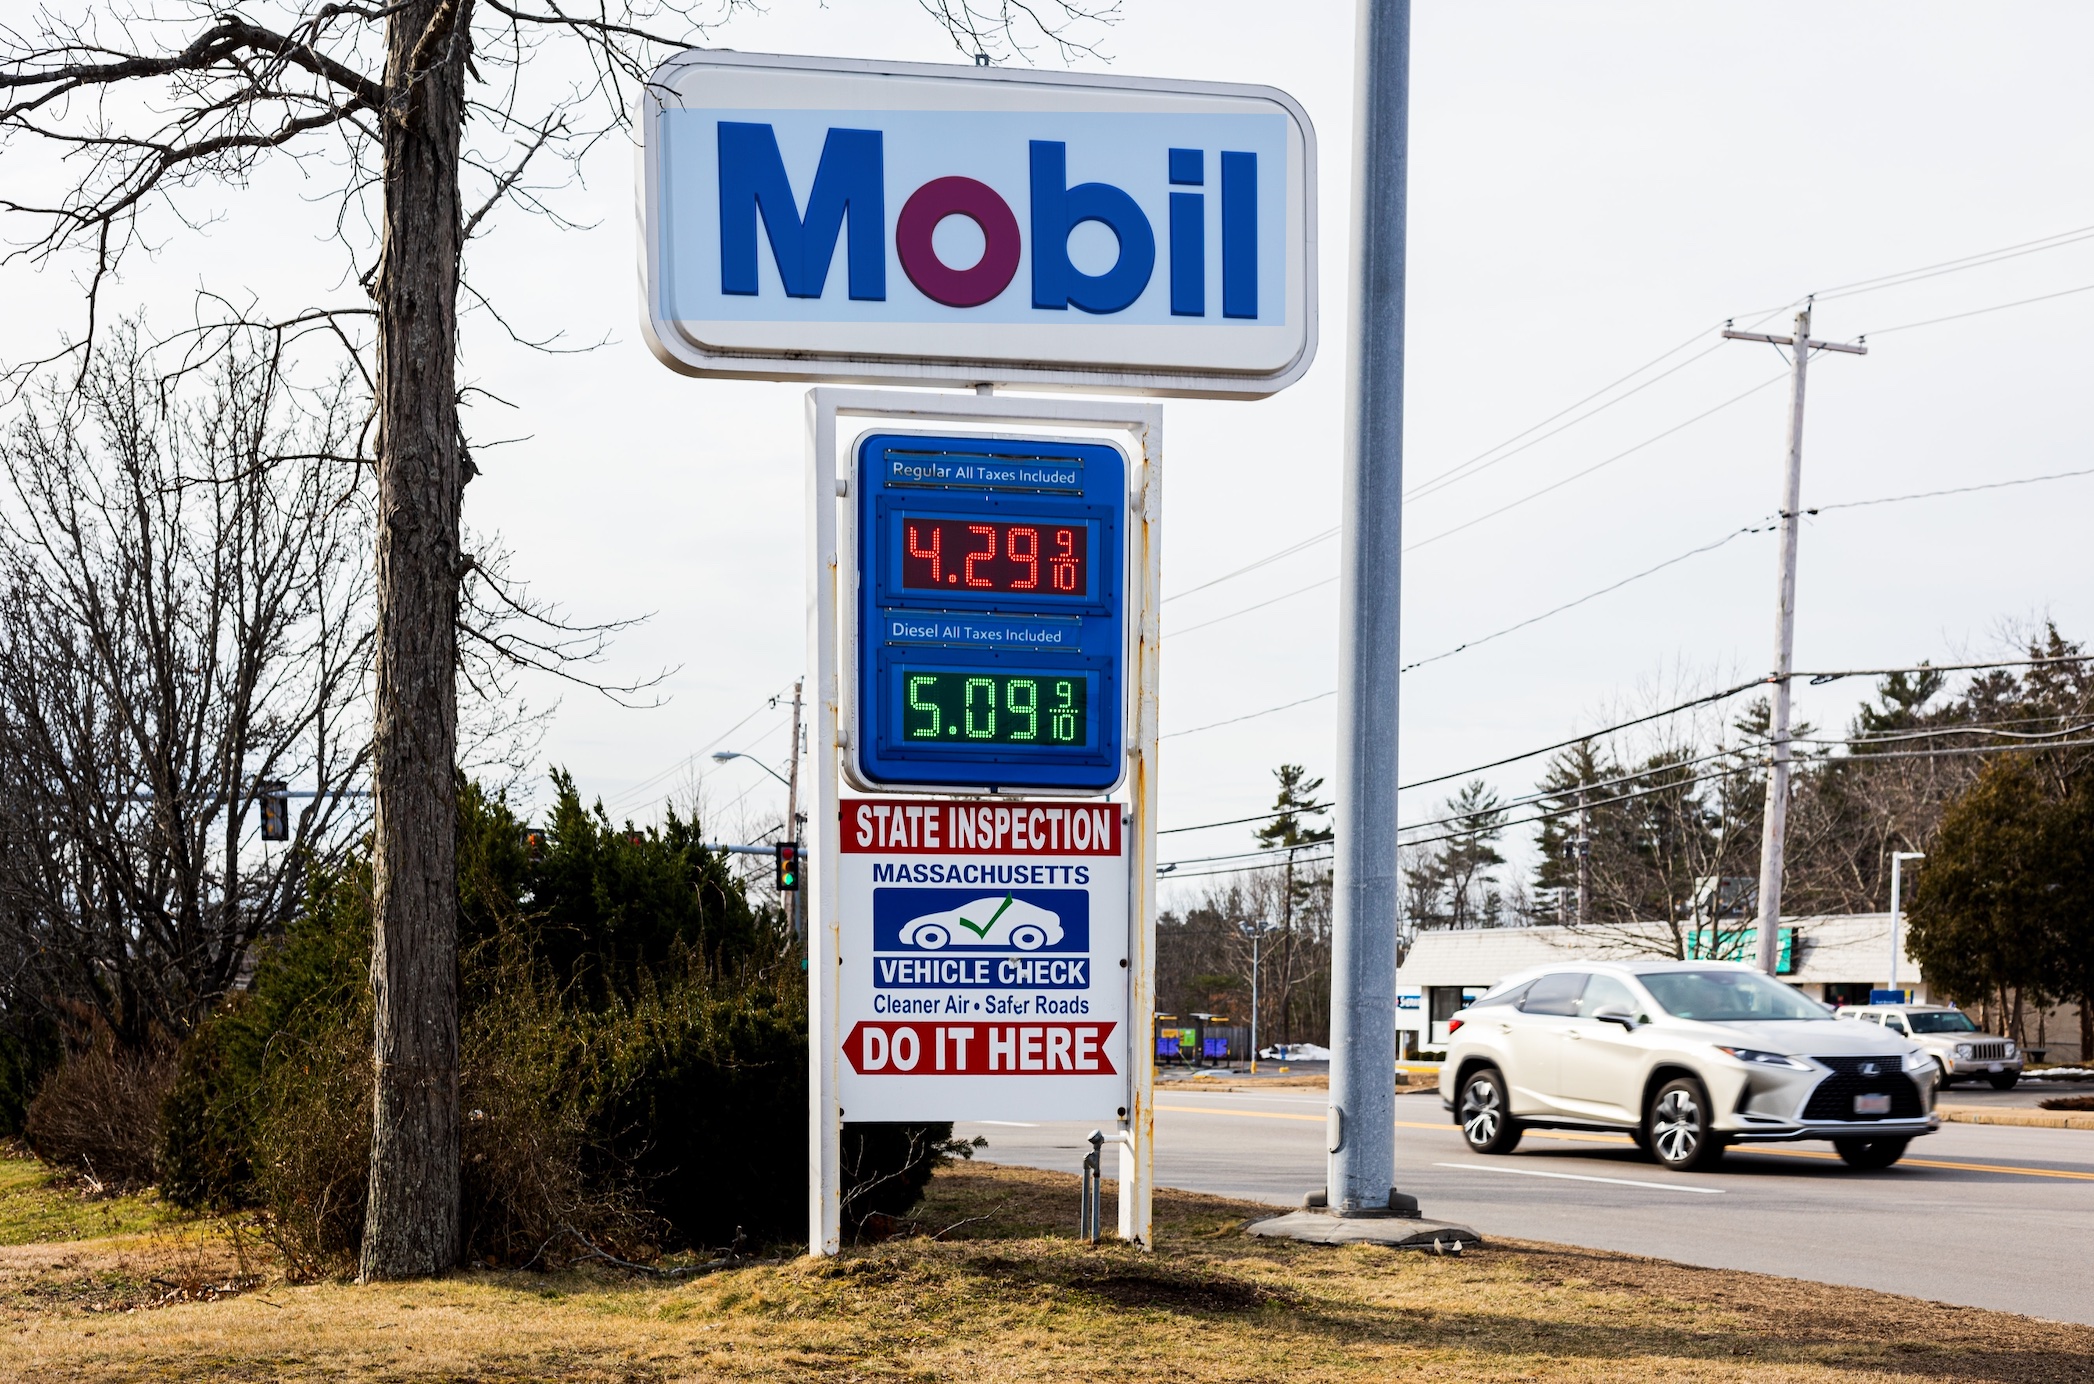 Mobil Gas sign showing gas prices; image by Yassine Khalfalli, via Unsplash.com.